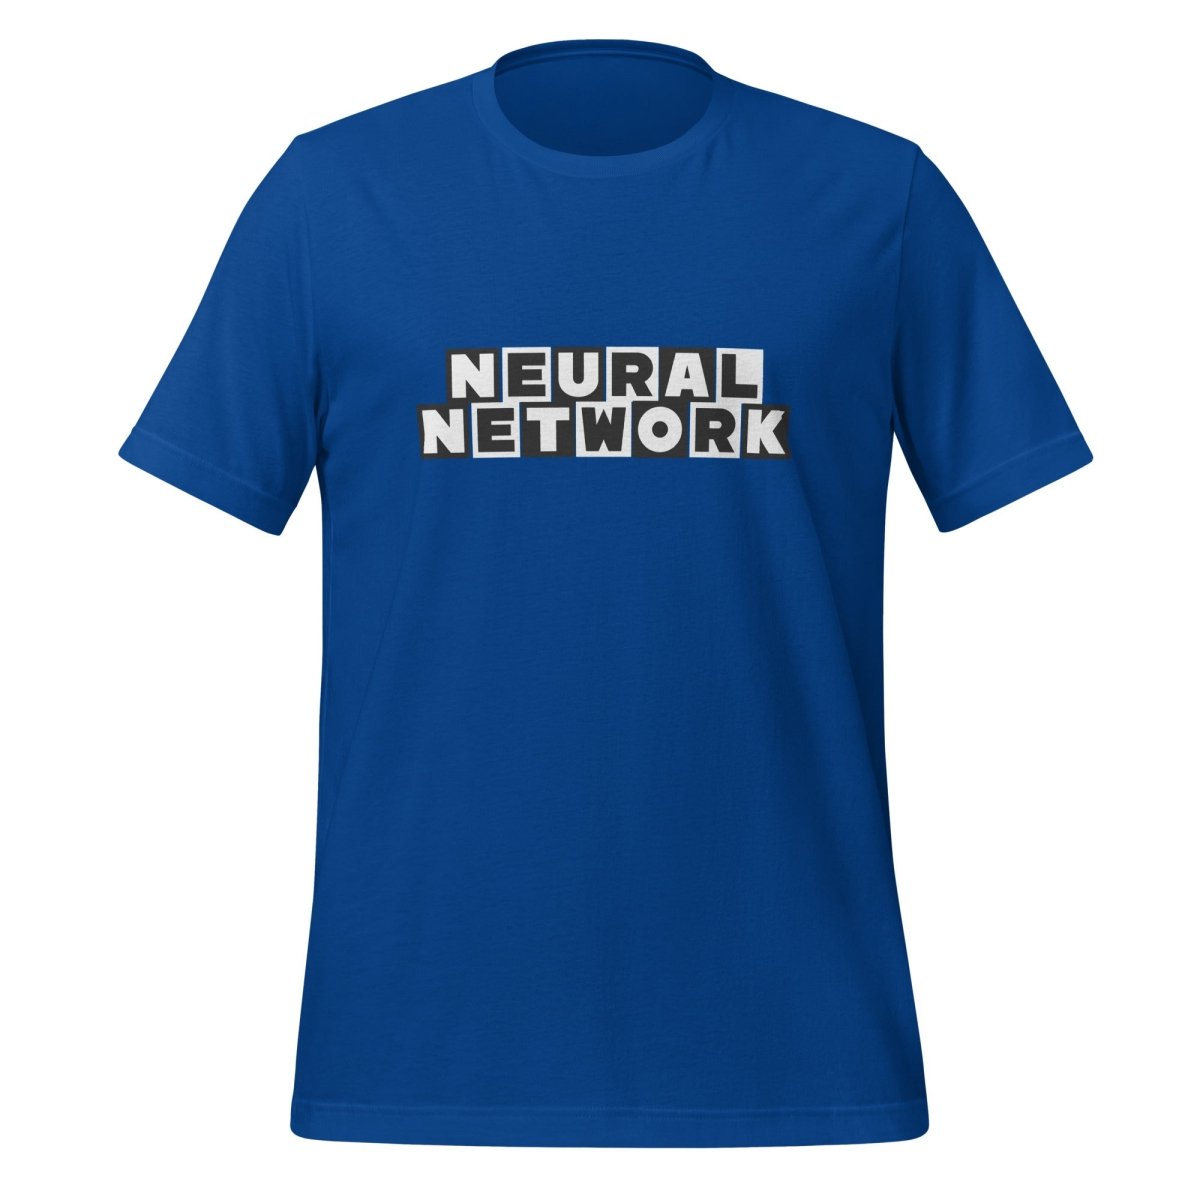 NEURAL NETWORK T - Shirt (unisex) - True Royal - AI Store